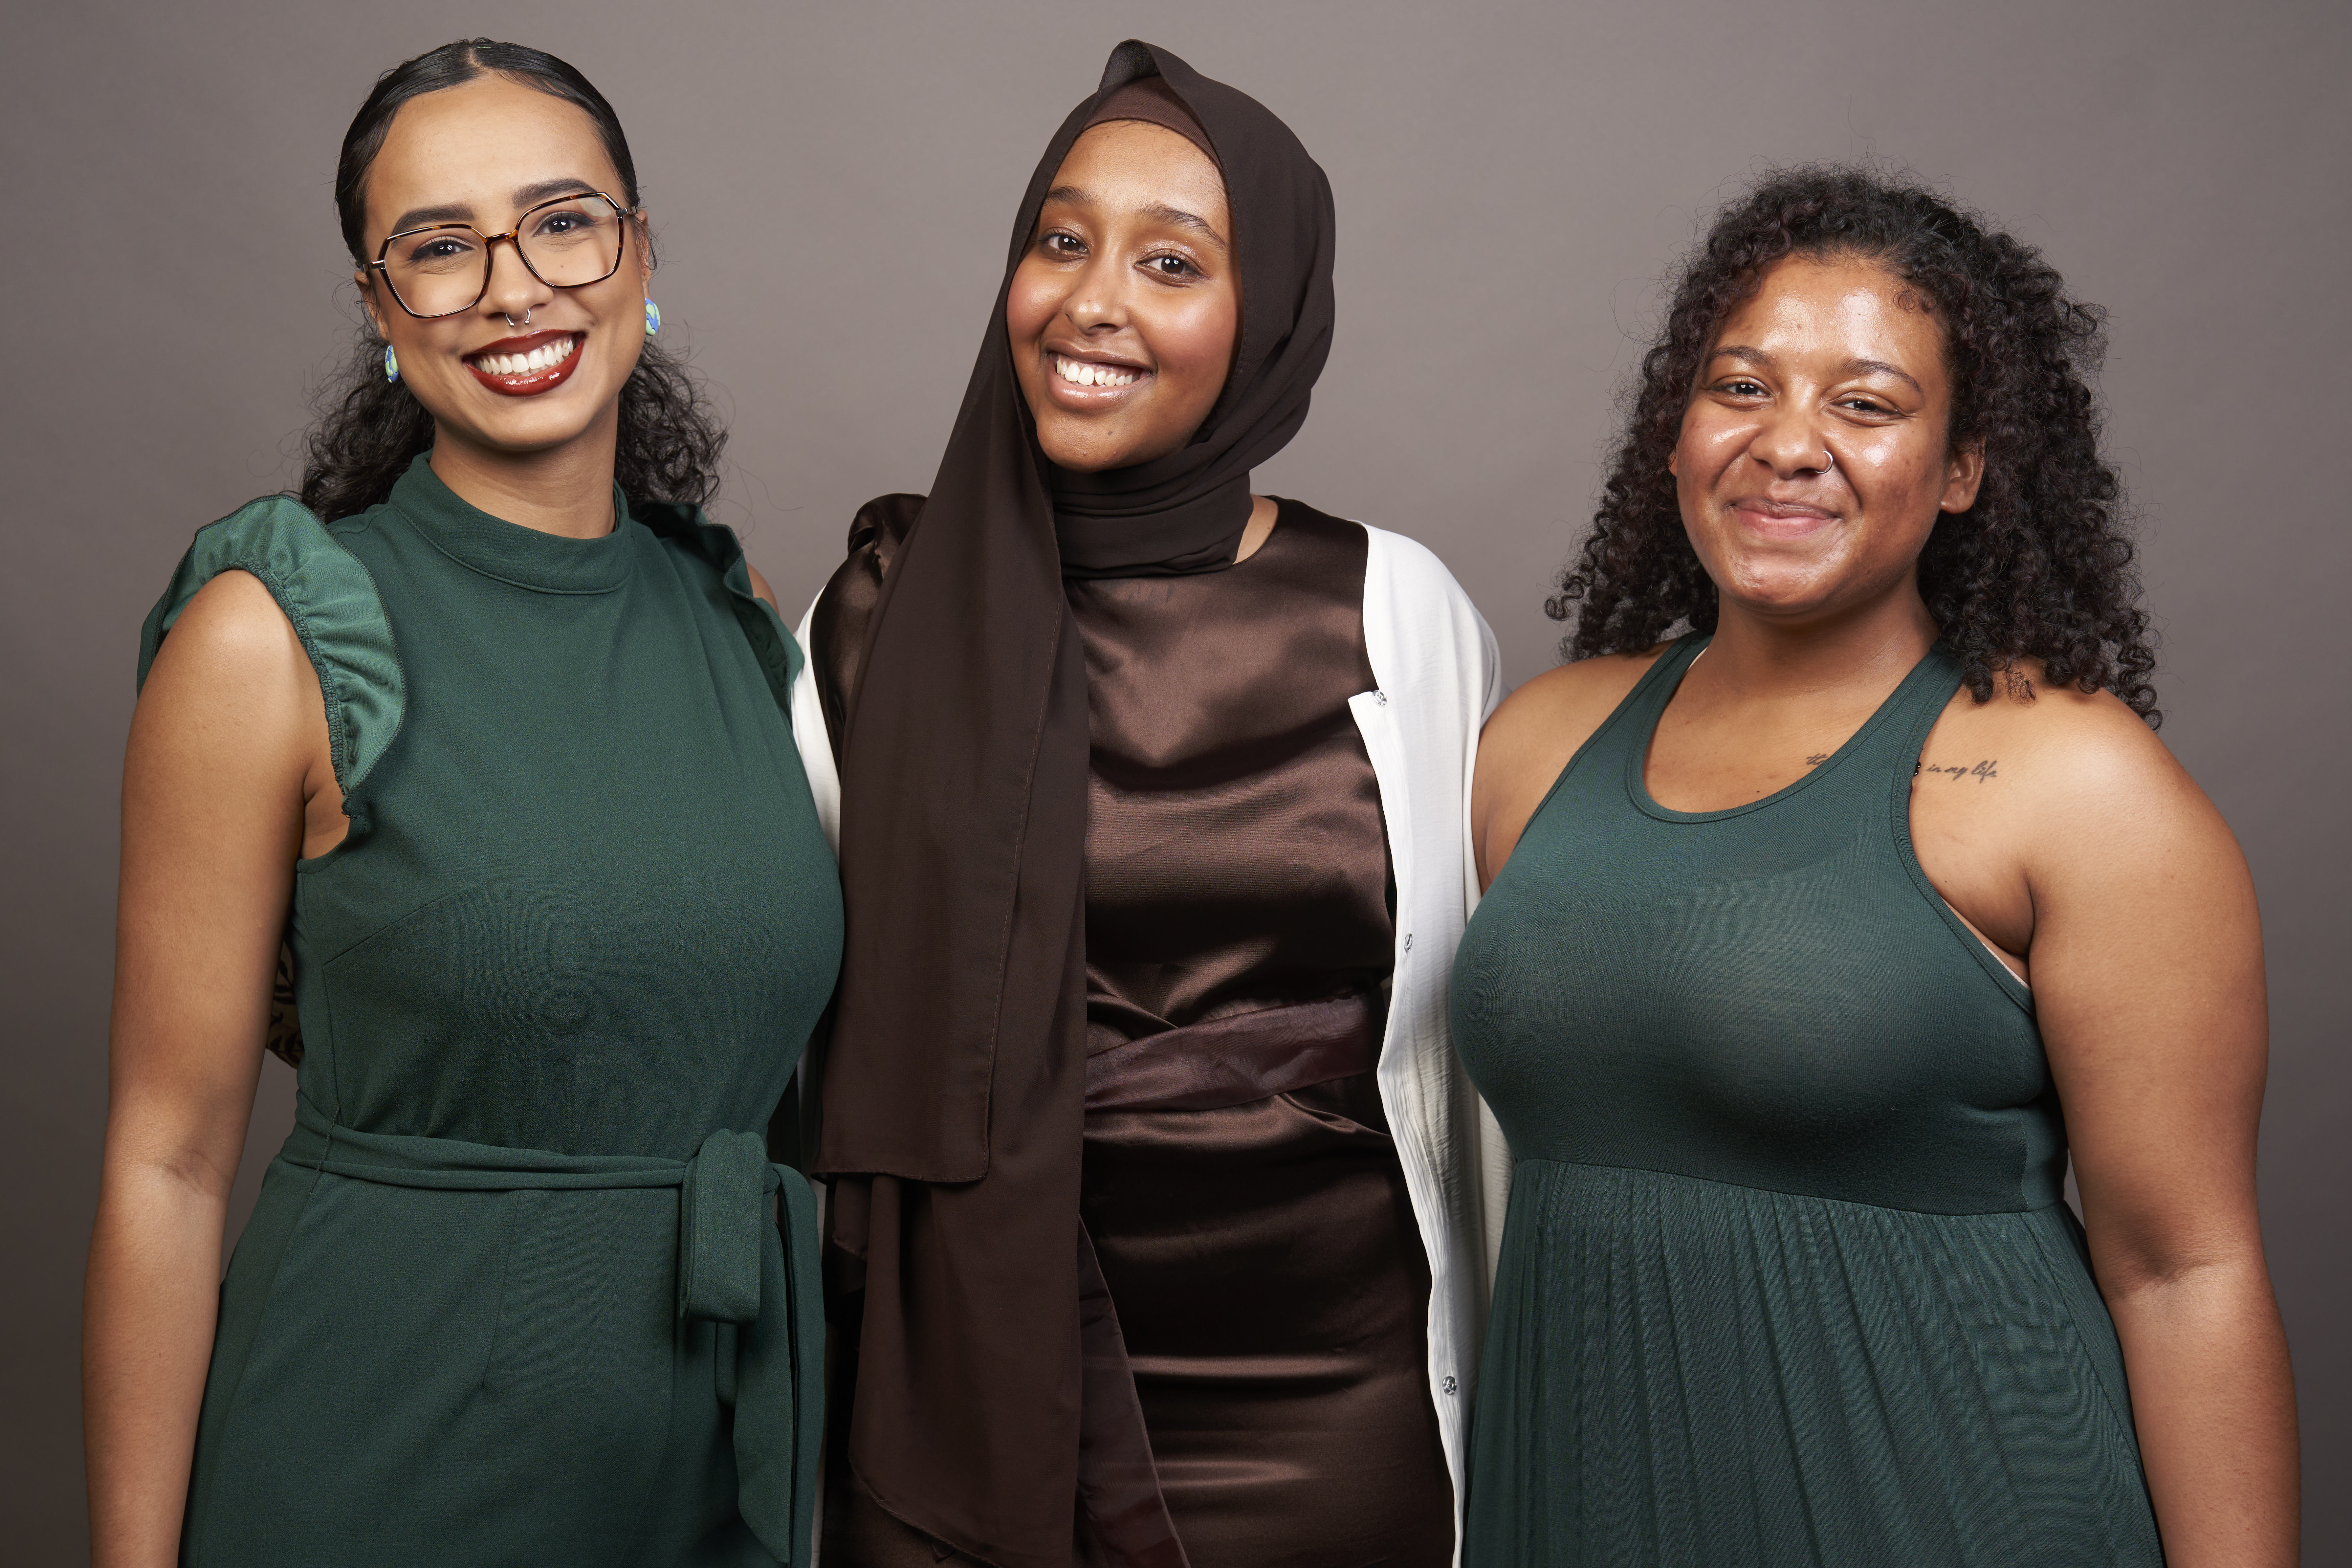 Amaal Abdi, Yasmine Elmi, and Destina Mattrasingh in formal wear